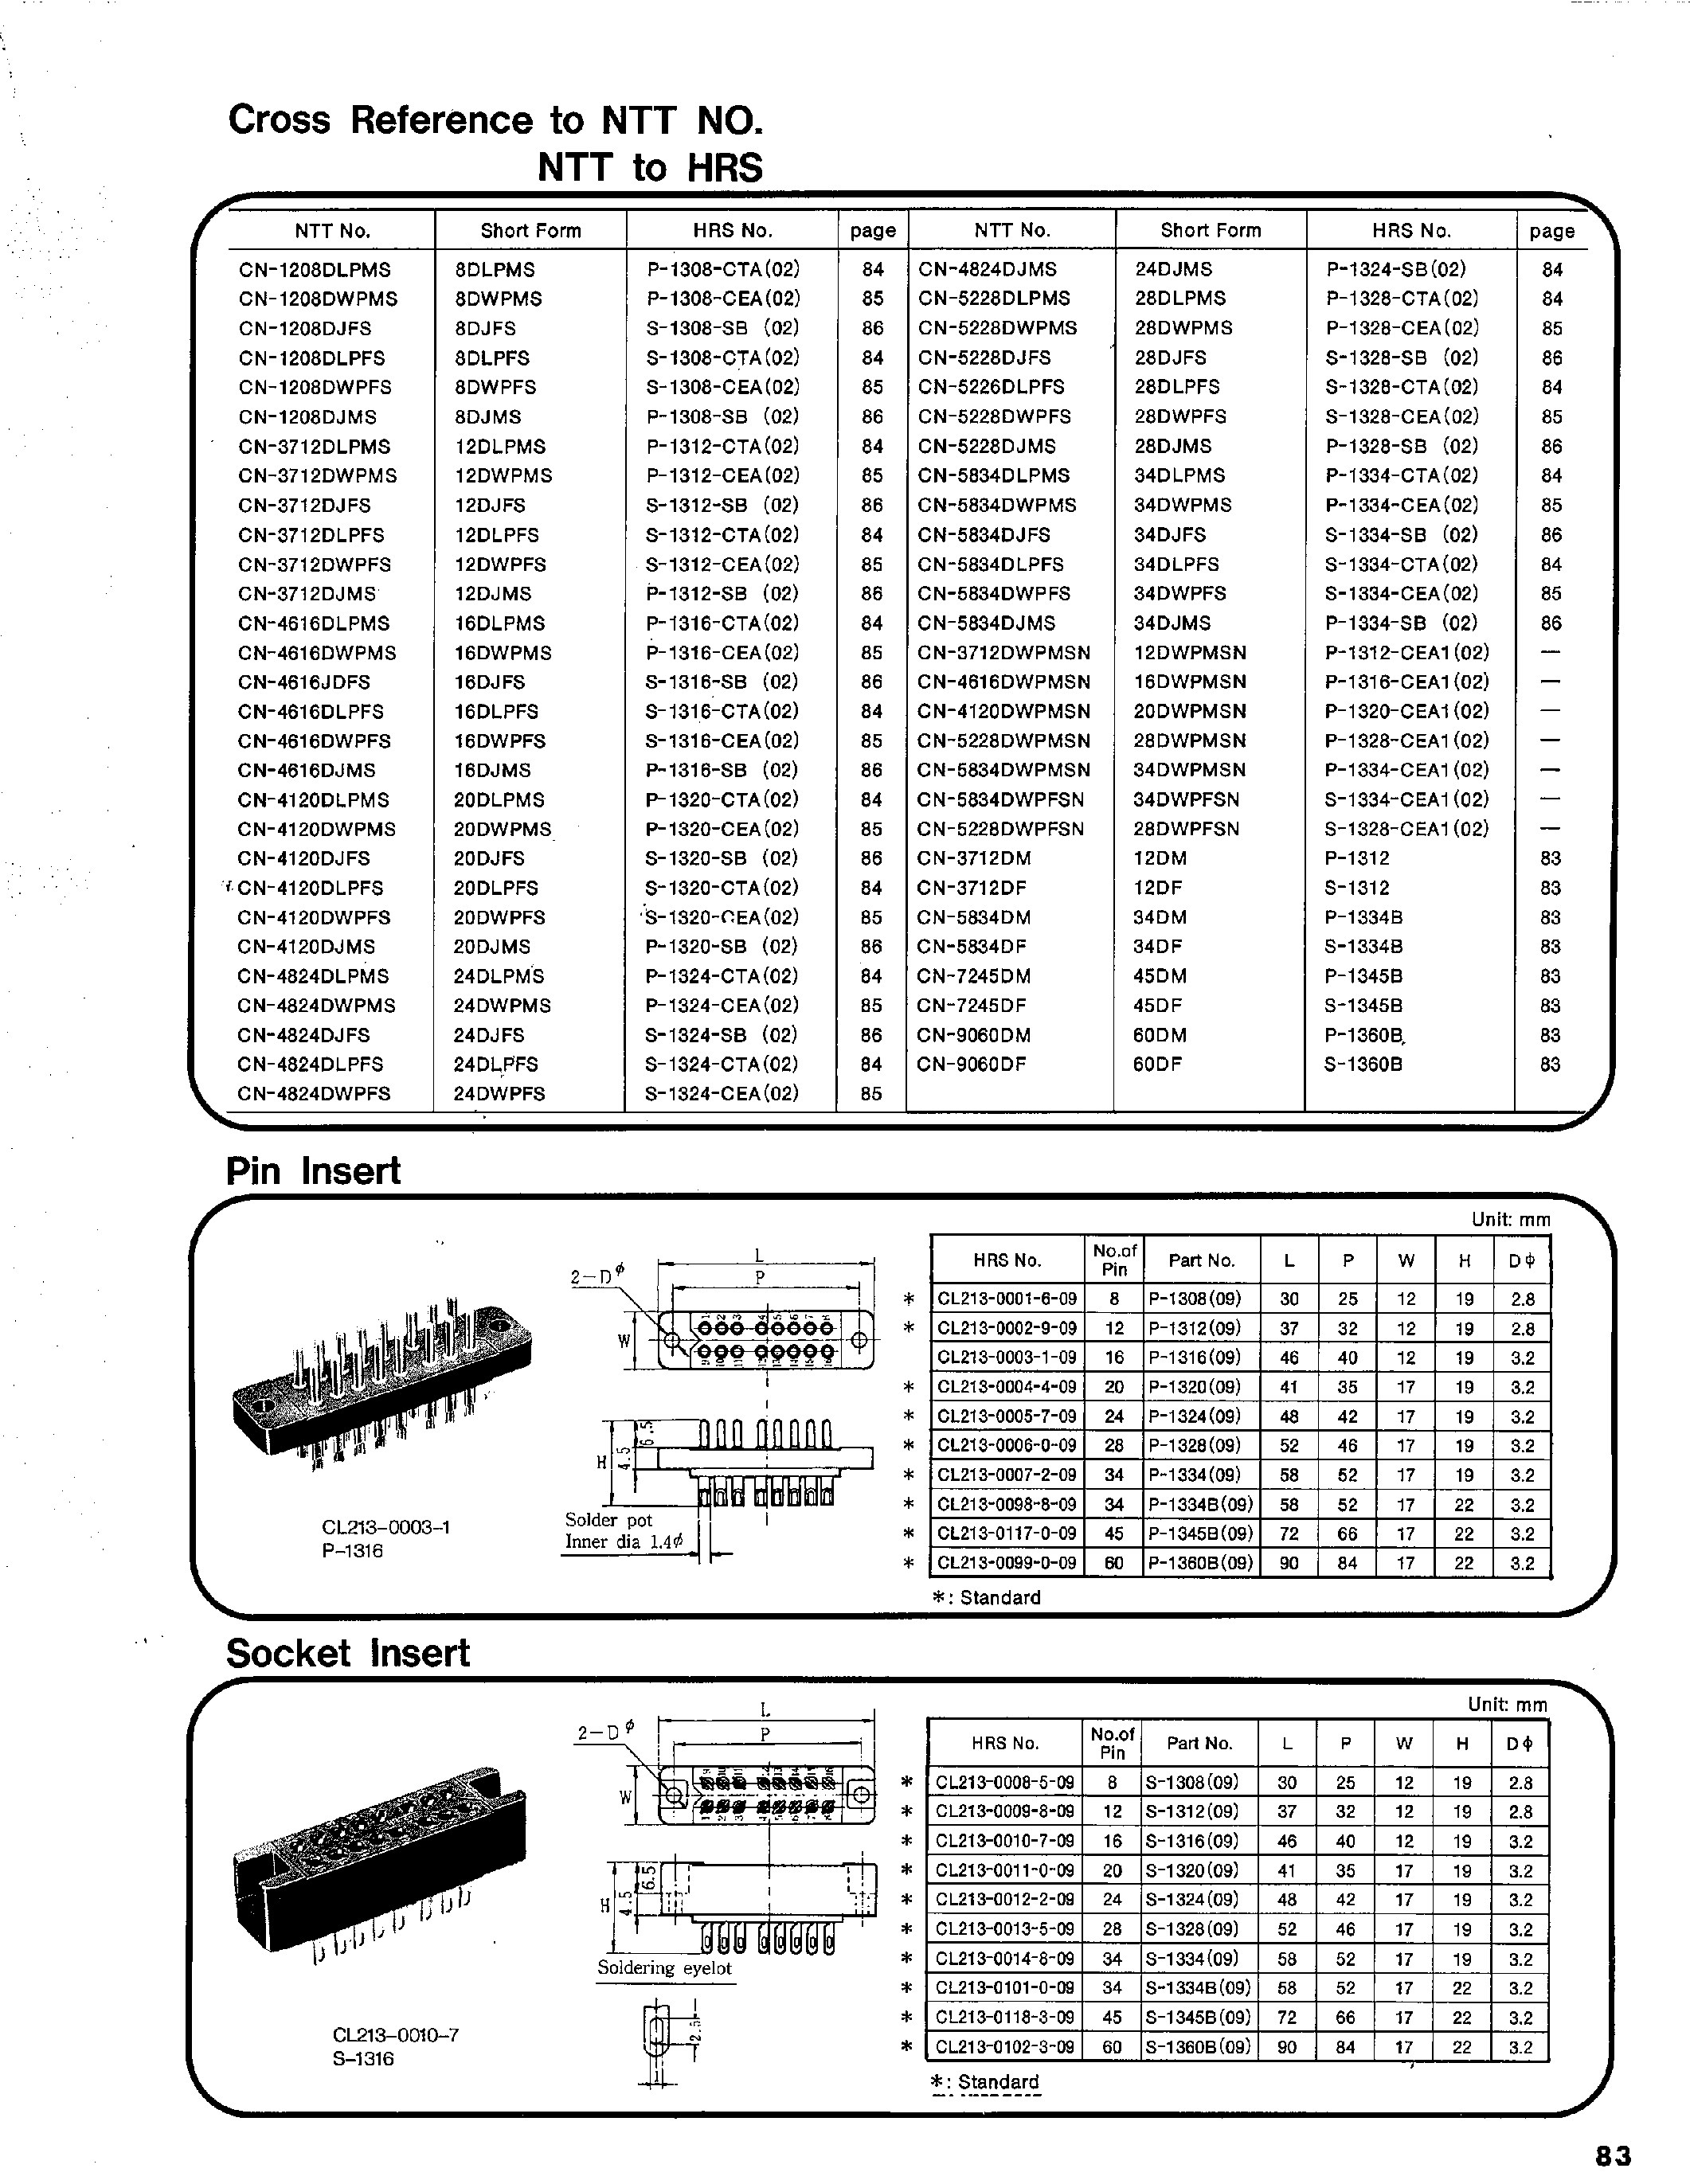 Datasheet P-1324-SB - 1300 SERIES RECTANGULAR CONNECTORS page 2